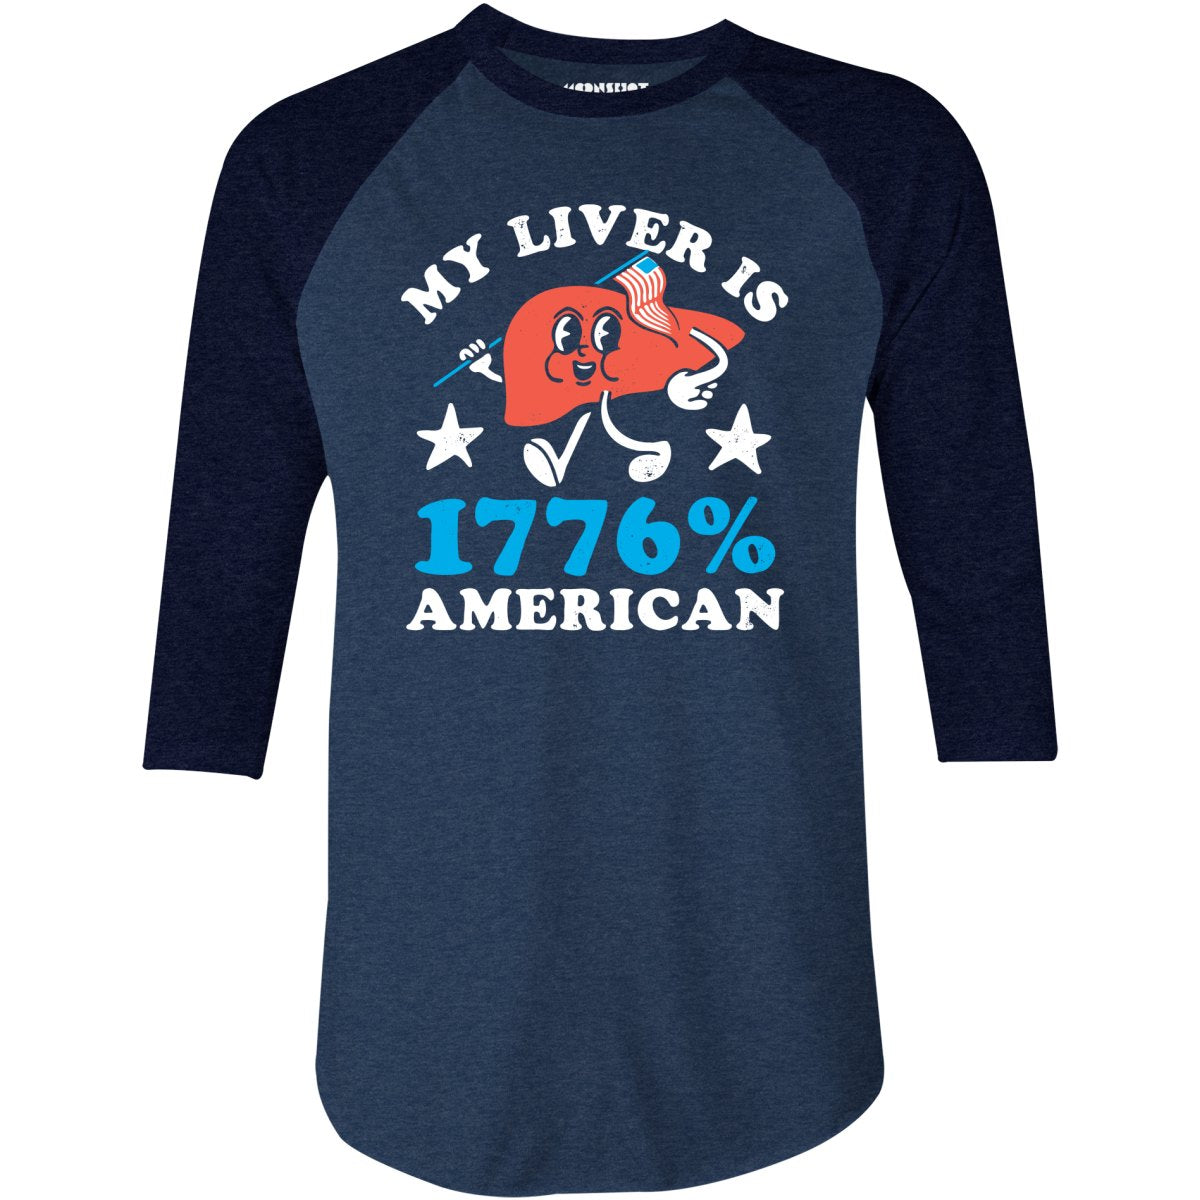 My Liver is 1776 Percent American - 3/4 Sleeve Raglan T-Shirt